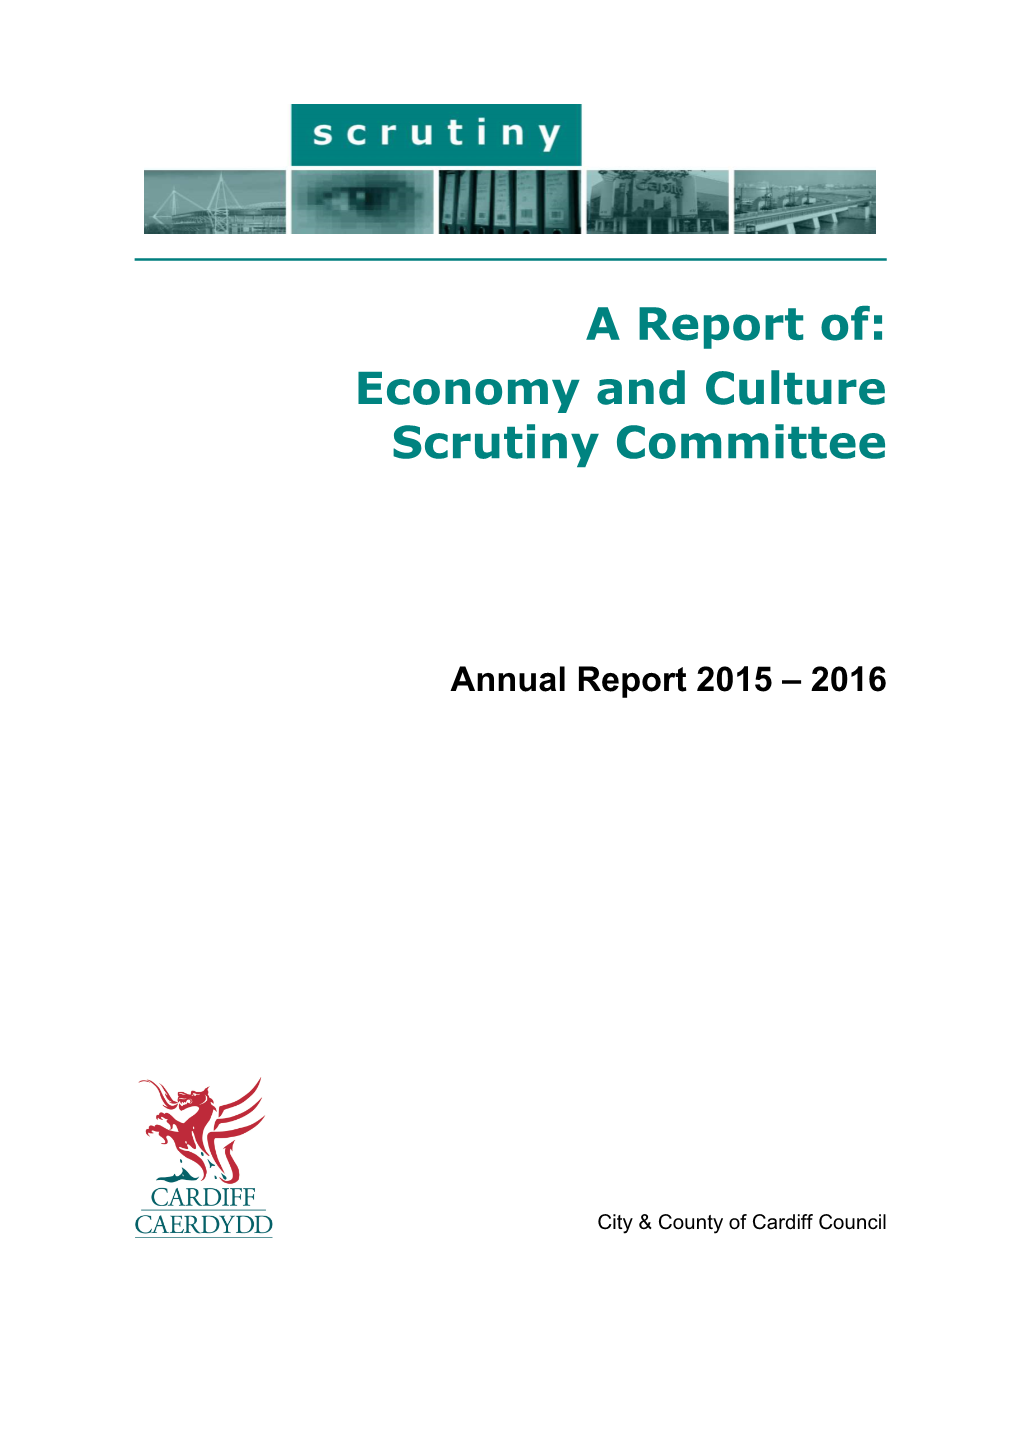 EDC Annual Report 2015-16 FINAL DRAFT